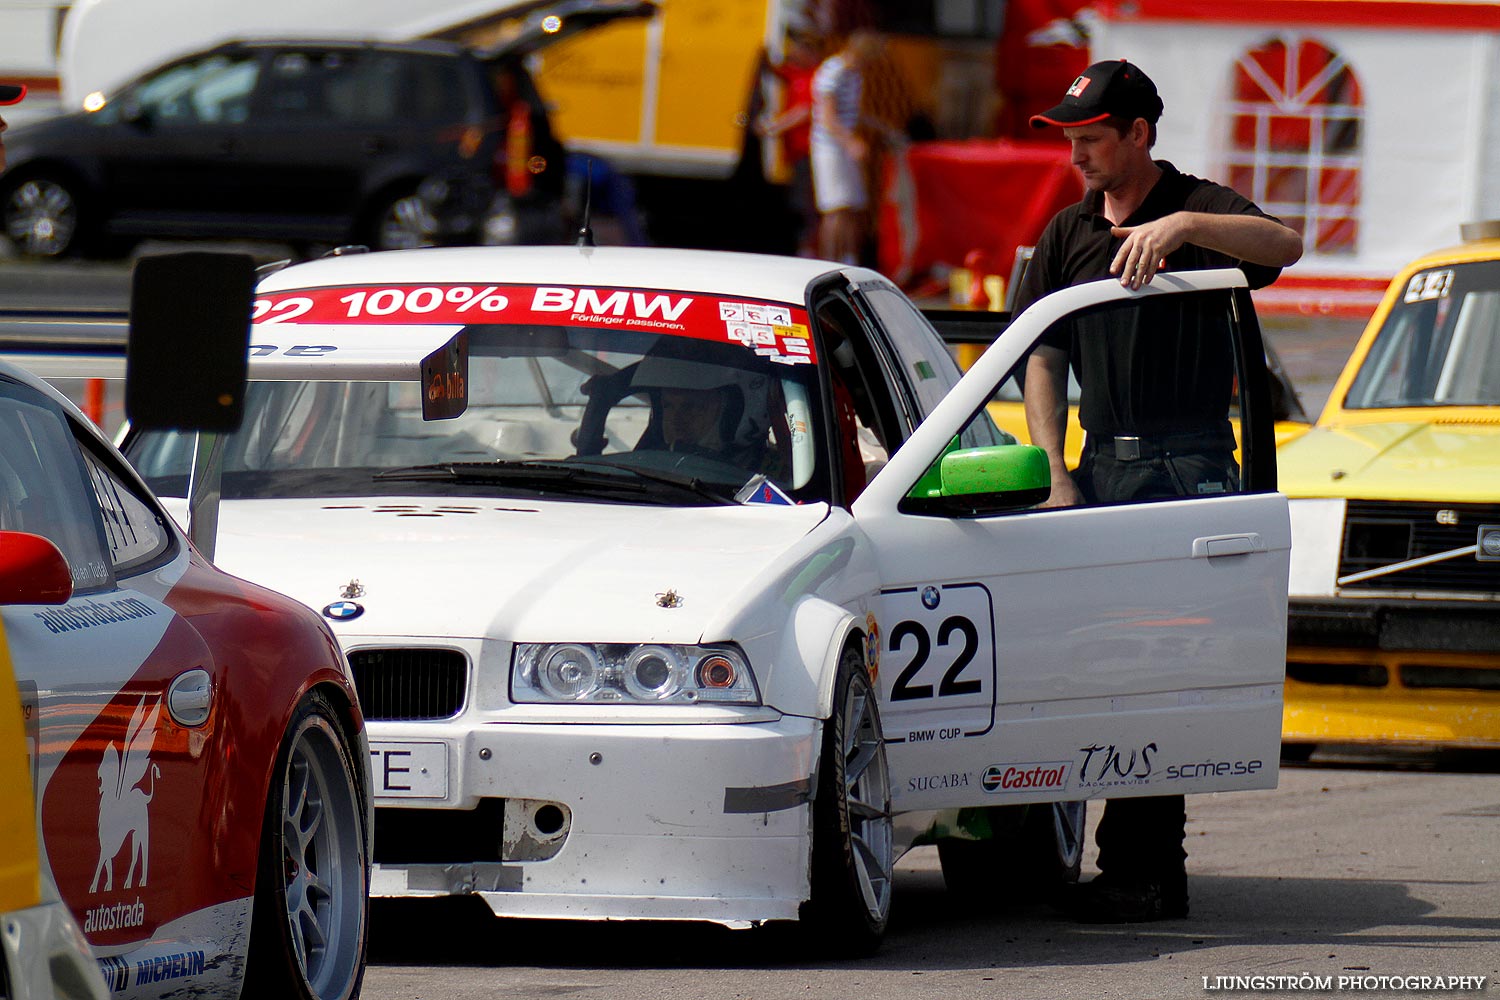 SSK Raceweek,mix,Kinnekulle Ring,Götene,Sverige,Motorsport,,2011,44426